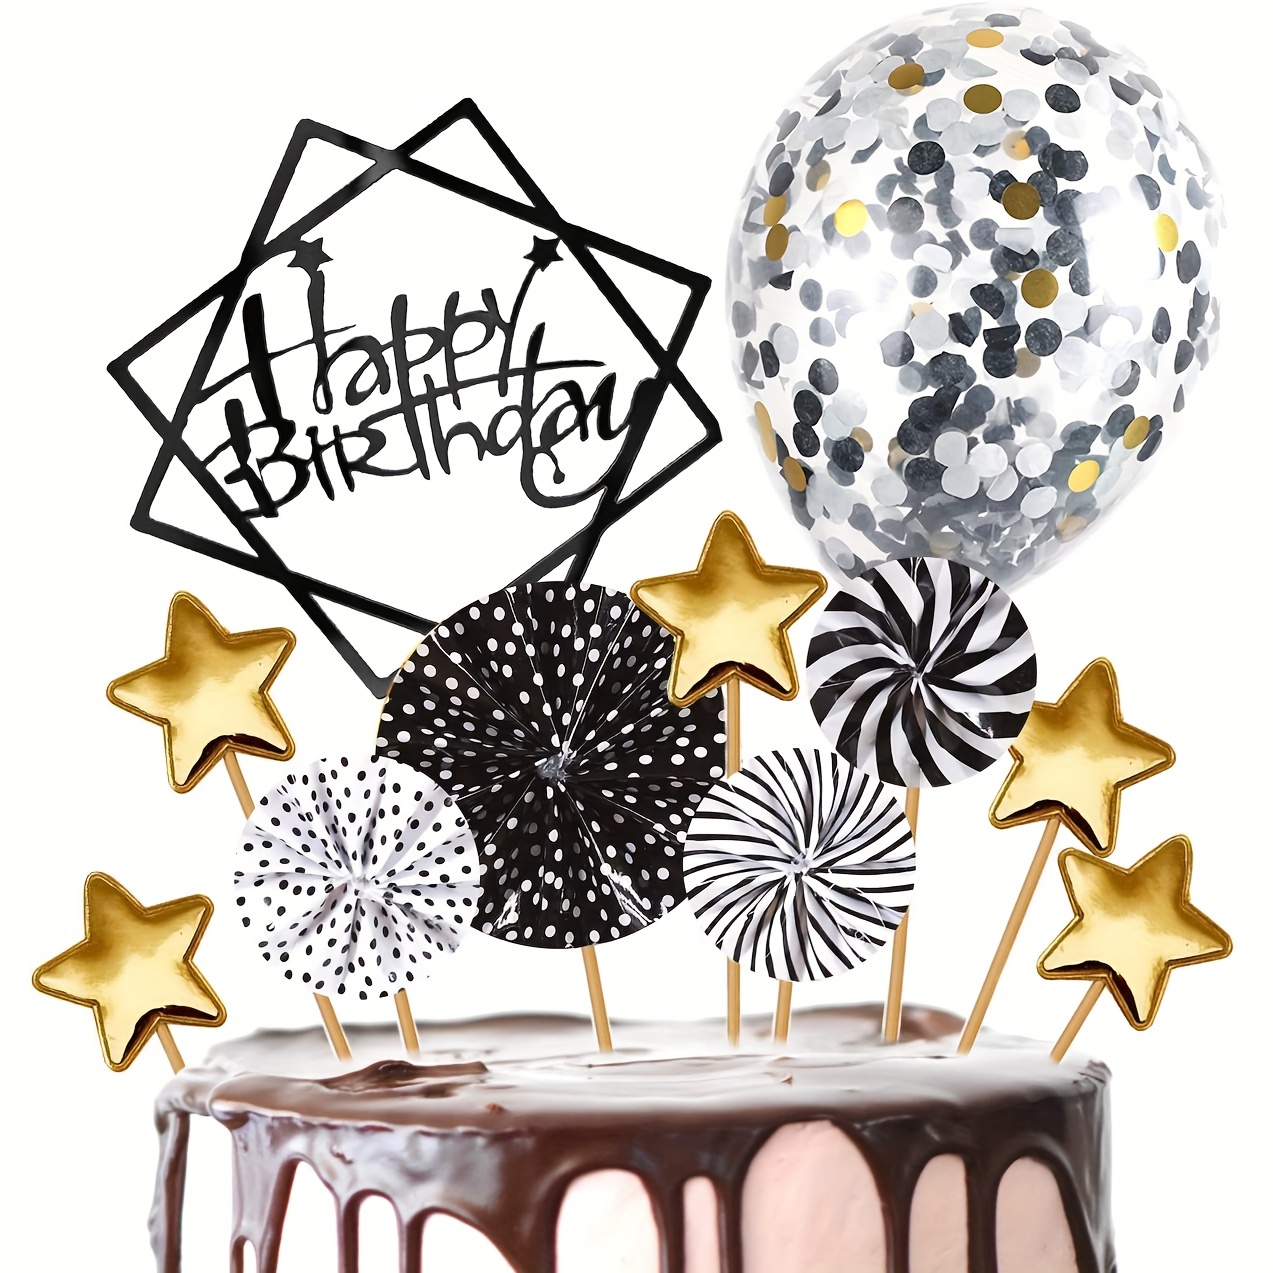 11PCS Happy Birthday Cake Topper Decorations Balloons Birthday Party